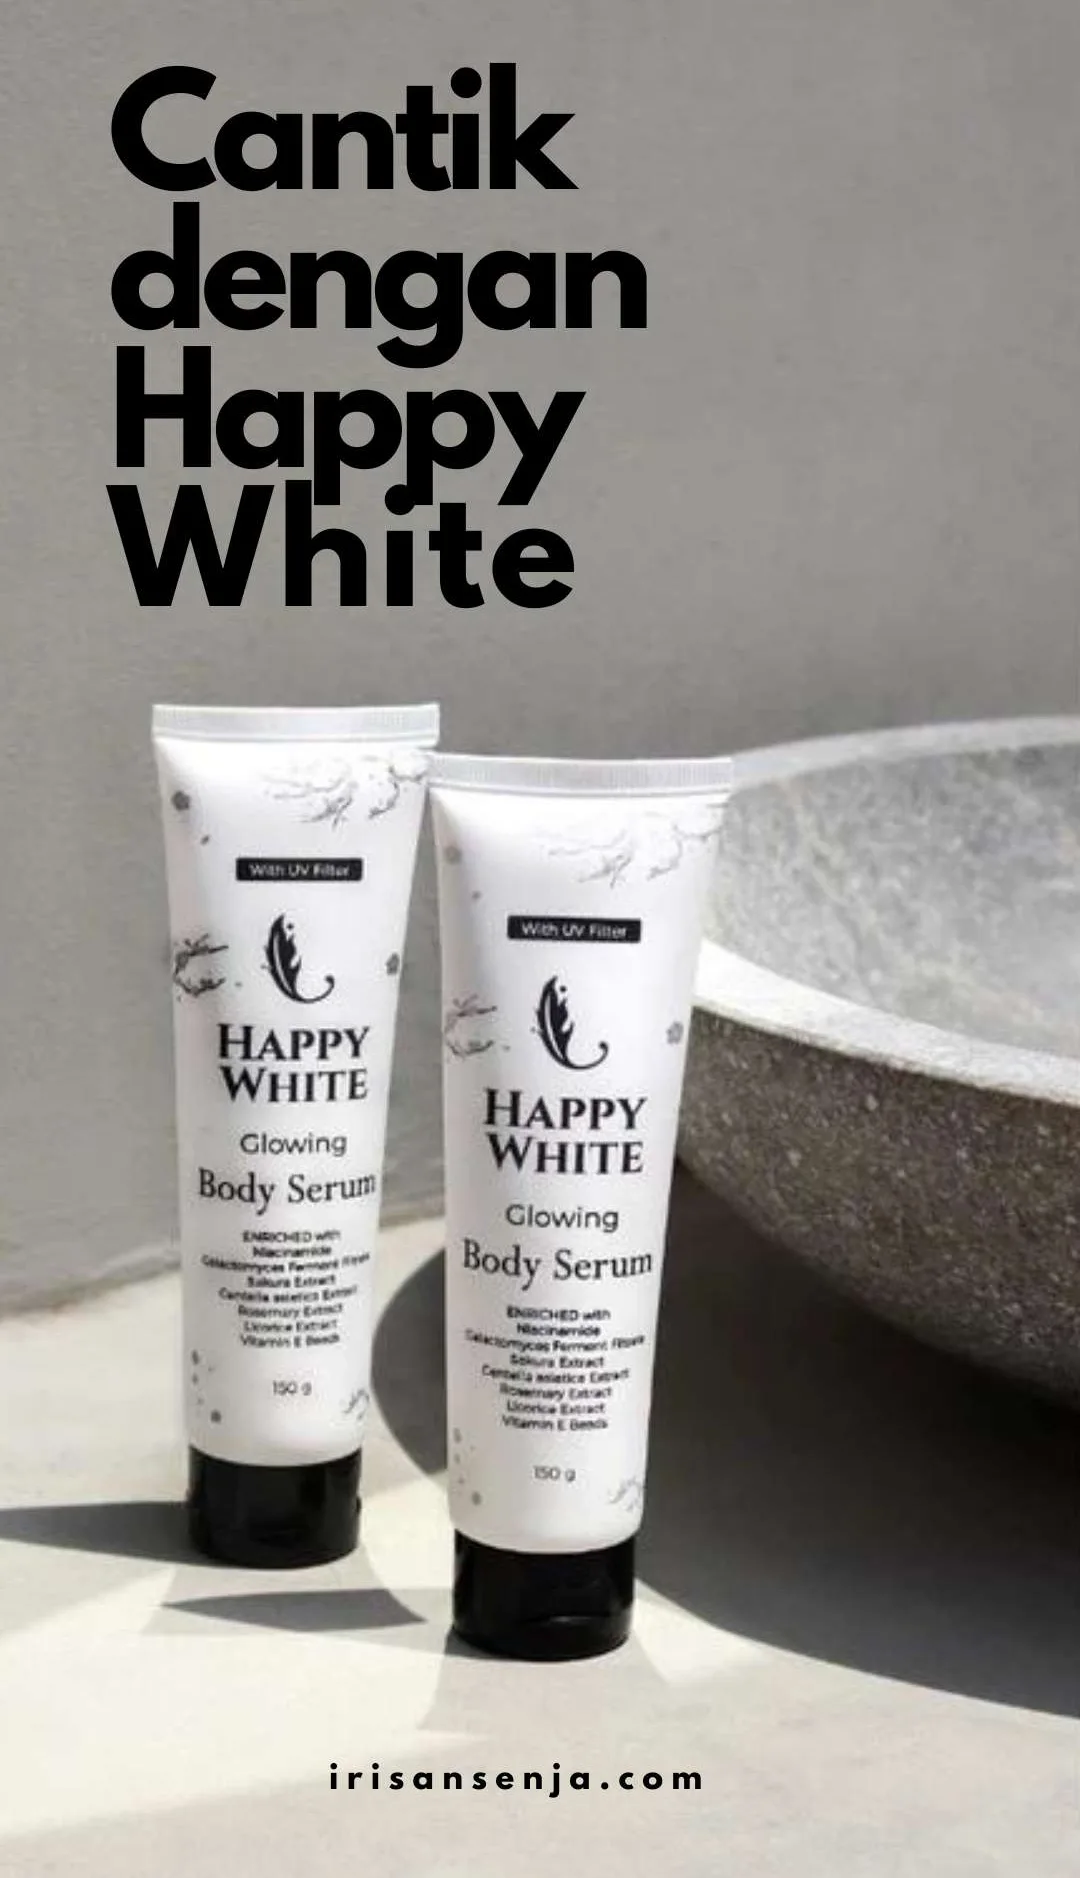 Cantik dengan Happy White